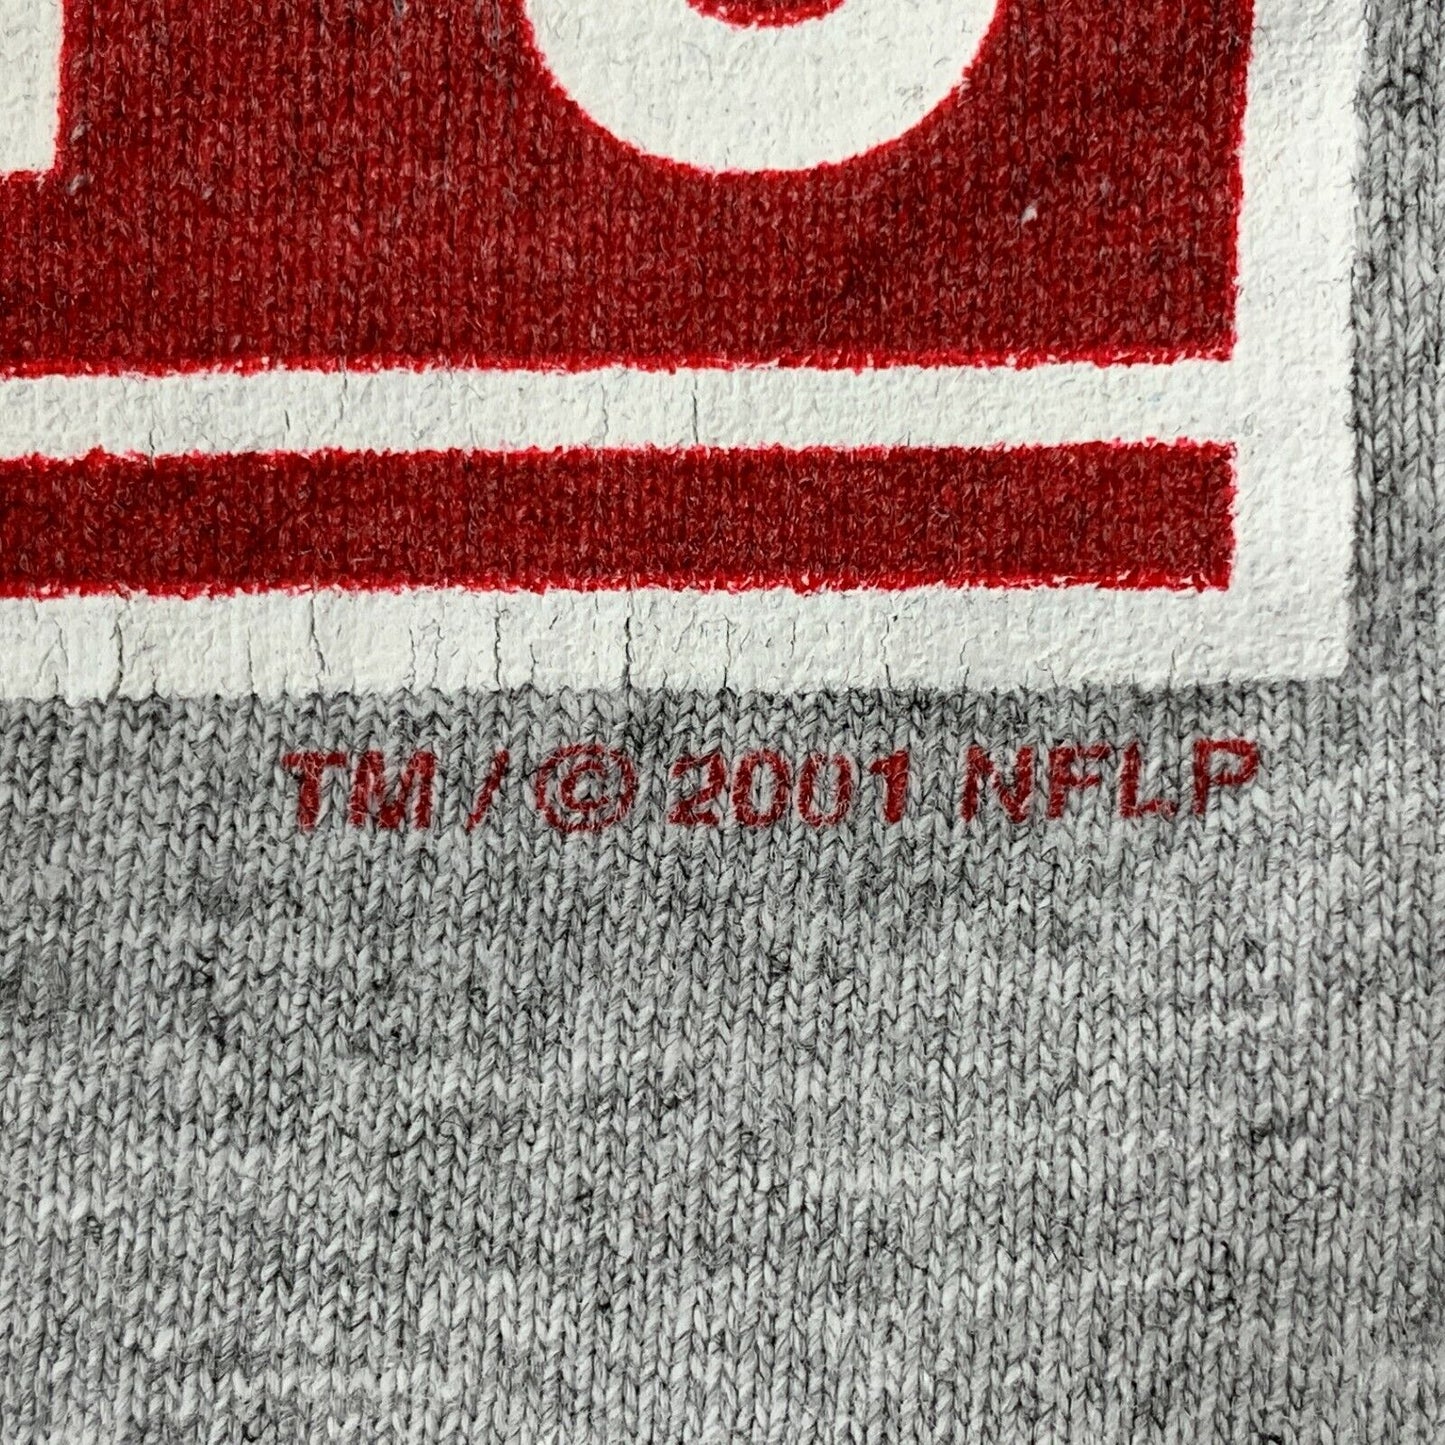 NFL Playoffs Vintage Y2Ks T Shirt Football 2001 Long Sleeve Gray Tee Large